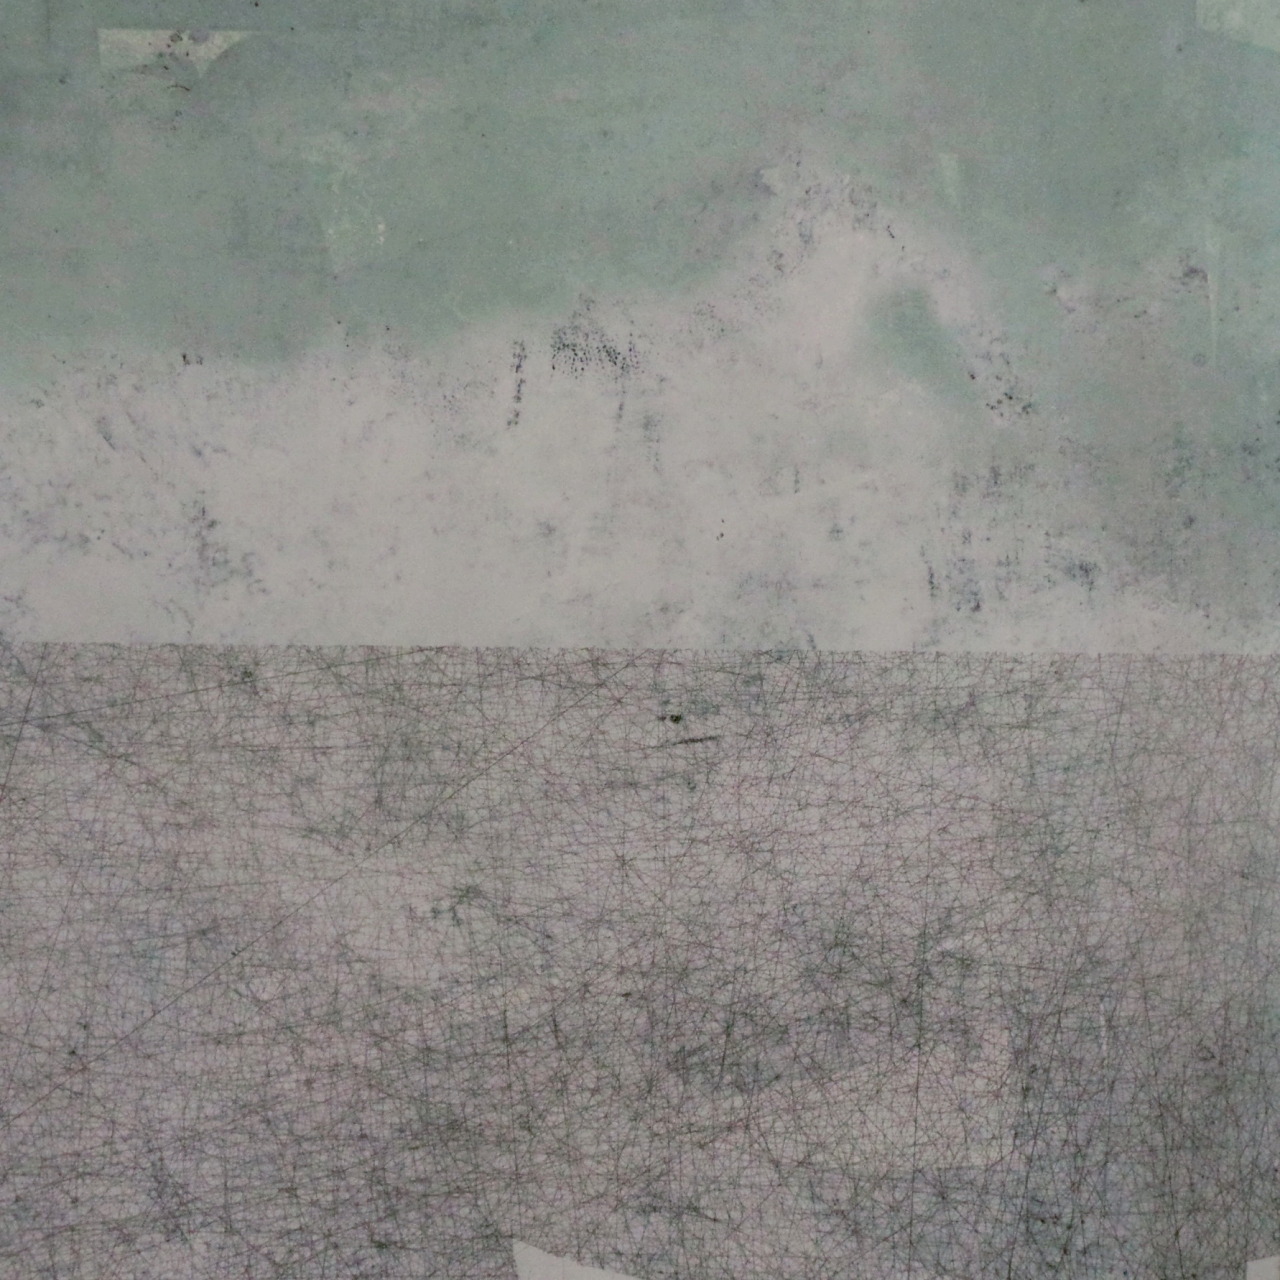 Paul Lorenz
JULY 30, #12, 1400 LINES
graphite, casein, ink on panel, 41″ x 41″, 2015